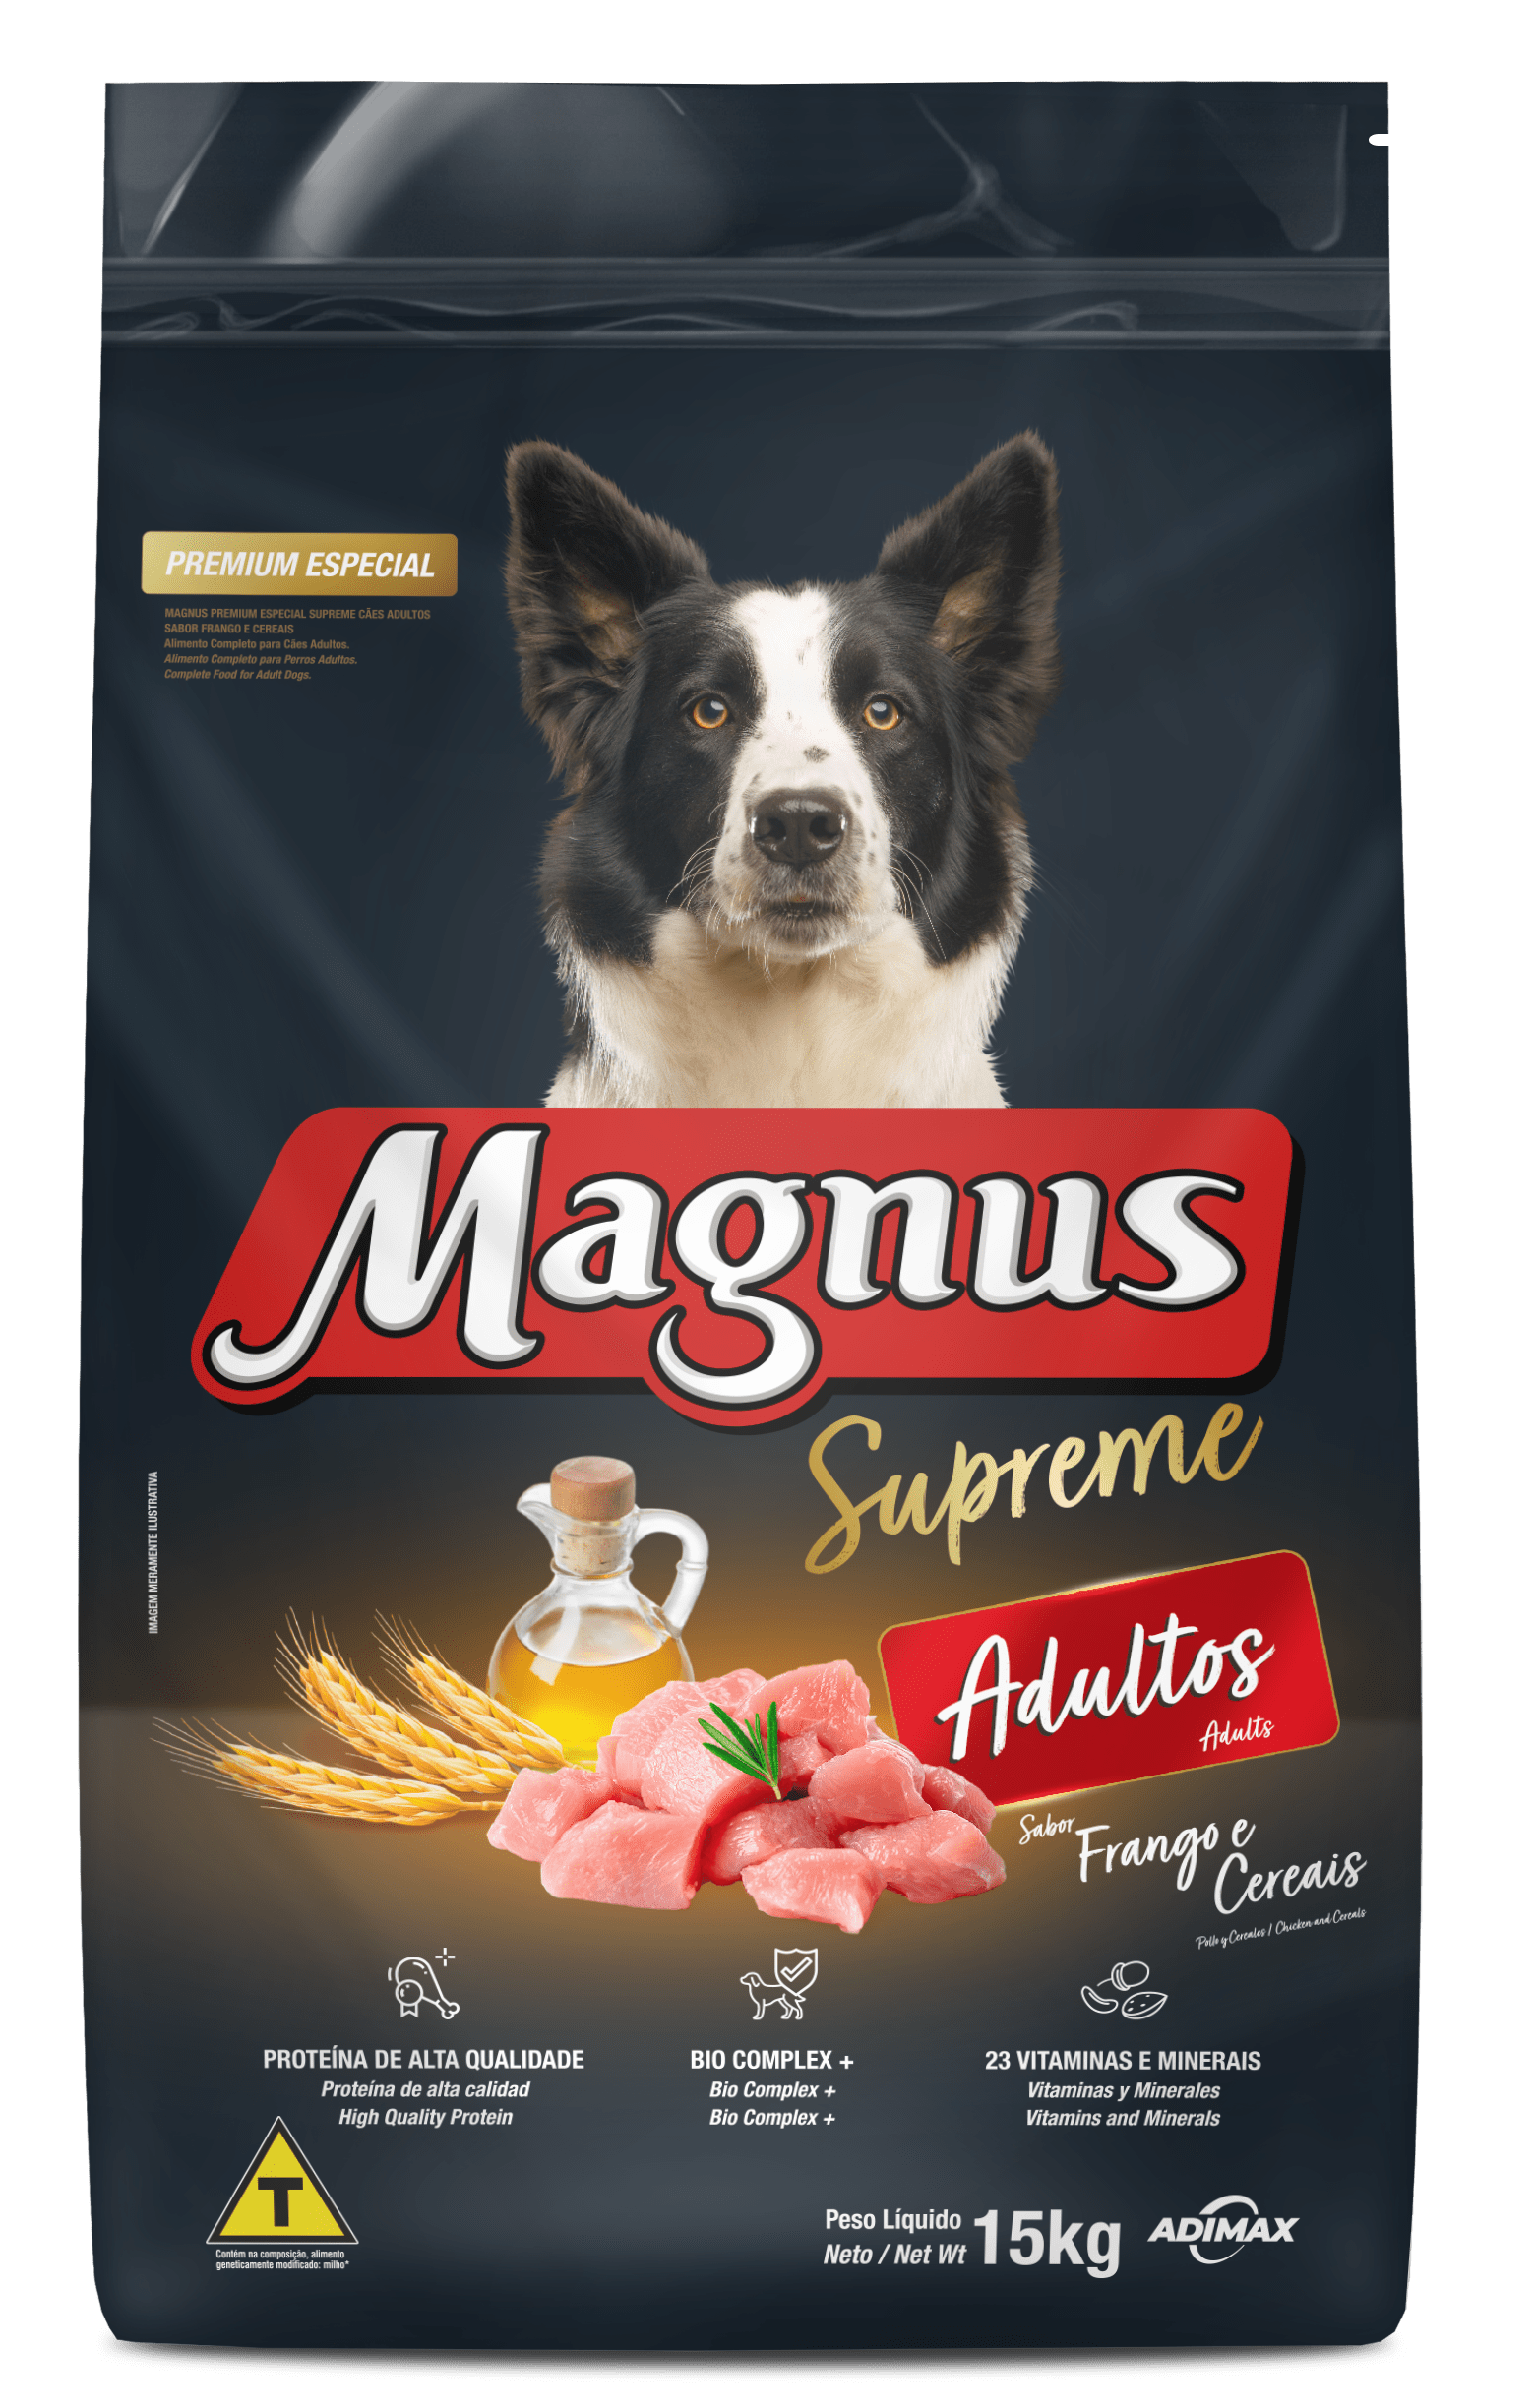 Magnus Premium Especial Supreme Adult Dogs Chicken and Cereals Flavor